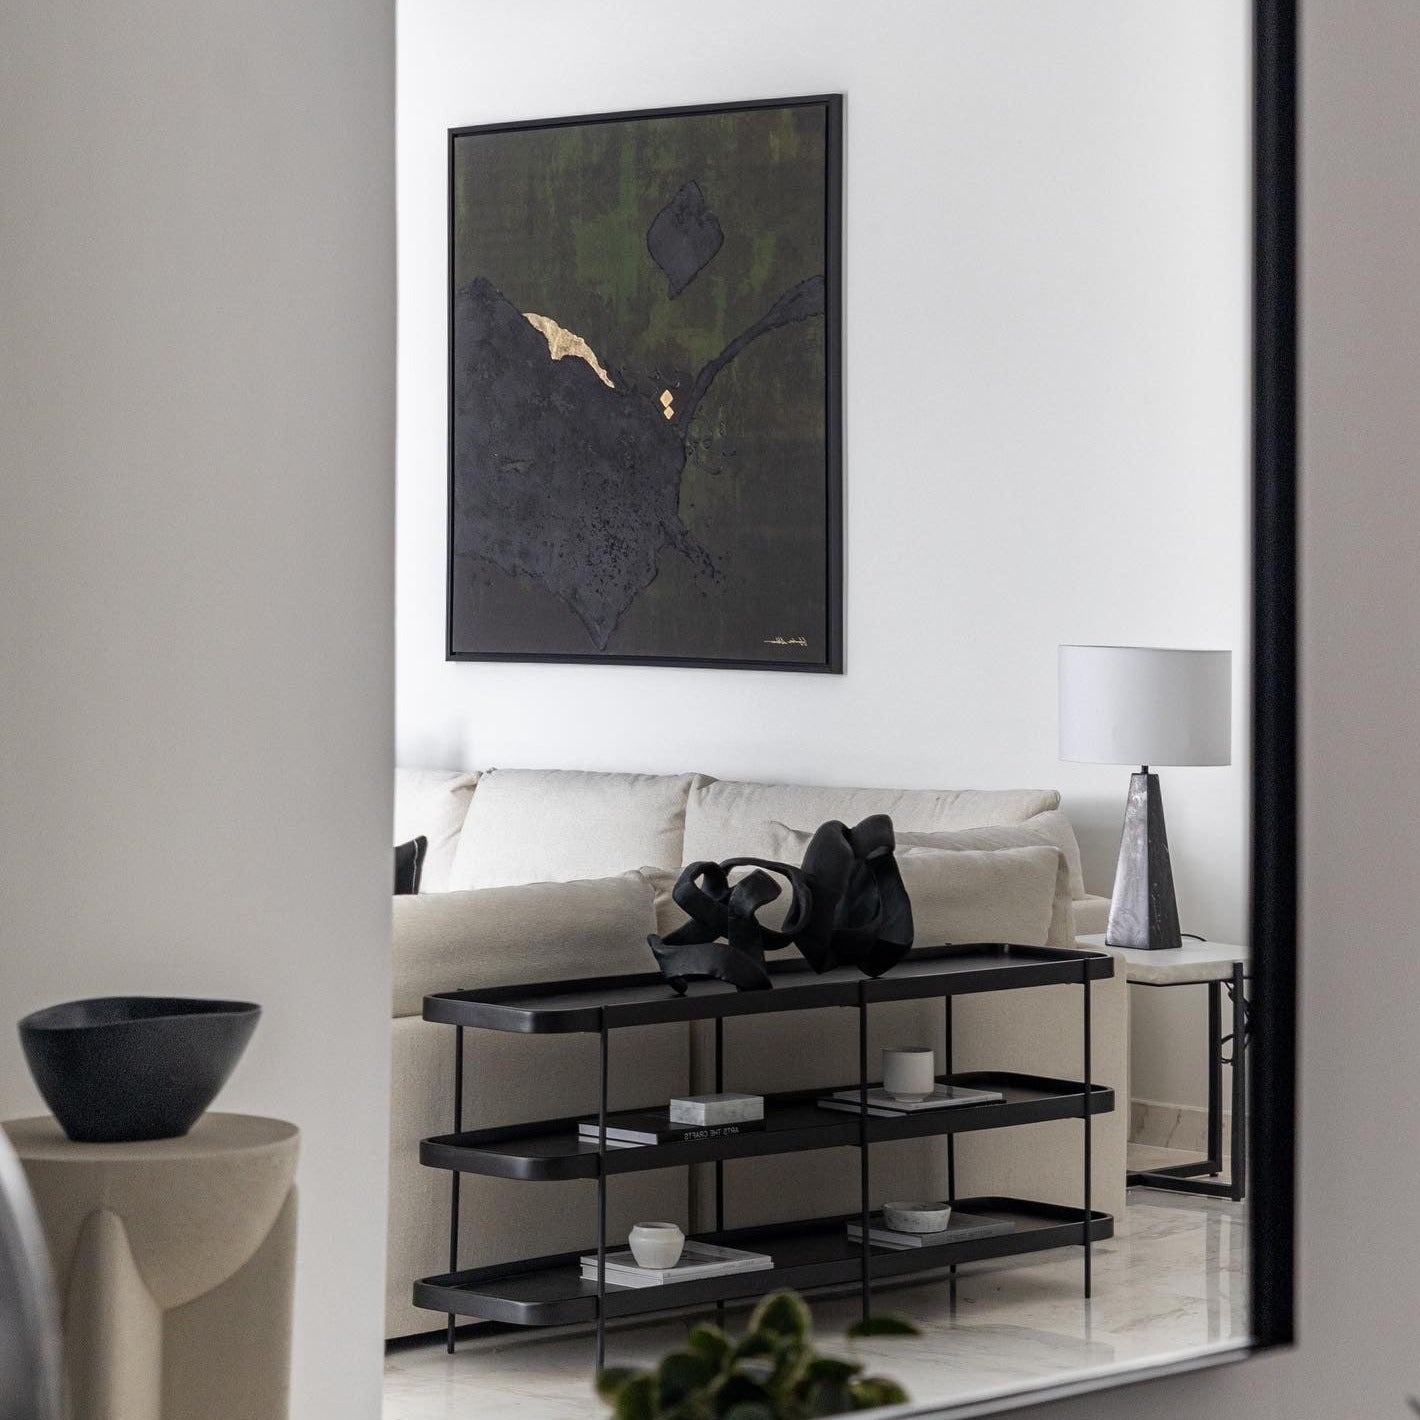 Helen Abbas textured abstract art for modern home decor and interior design